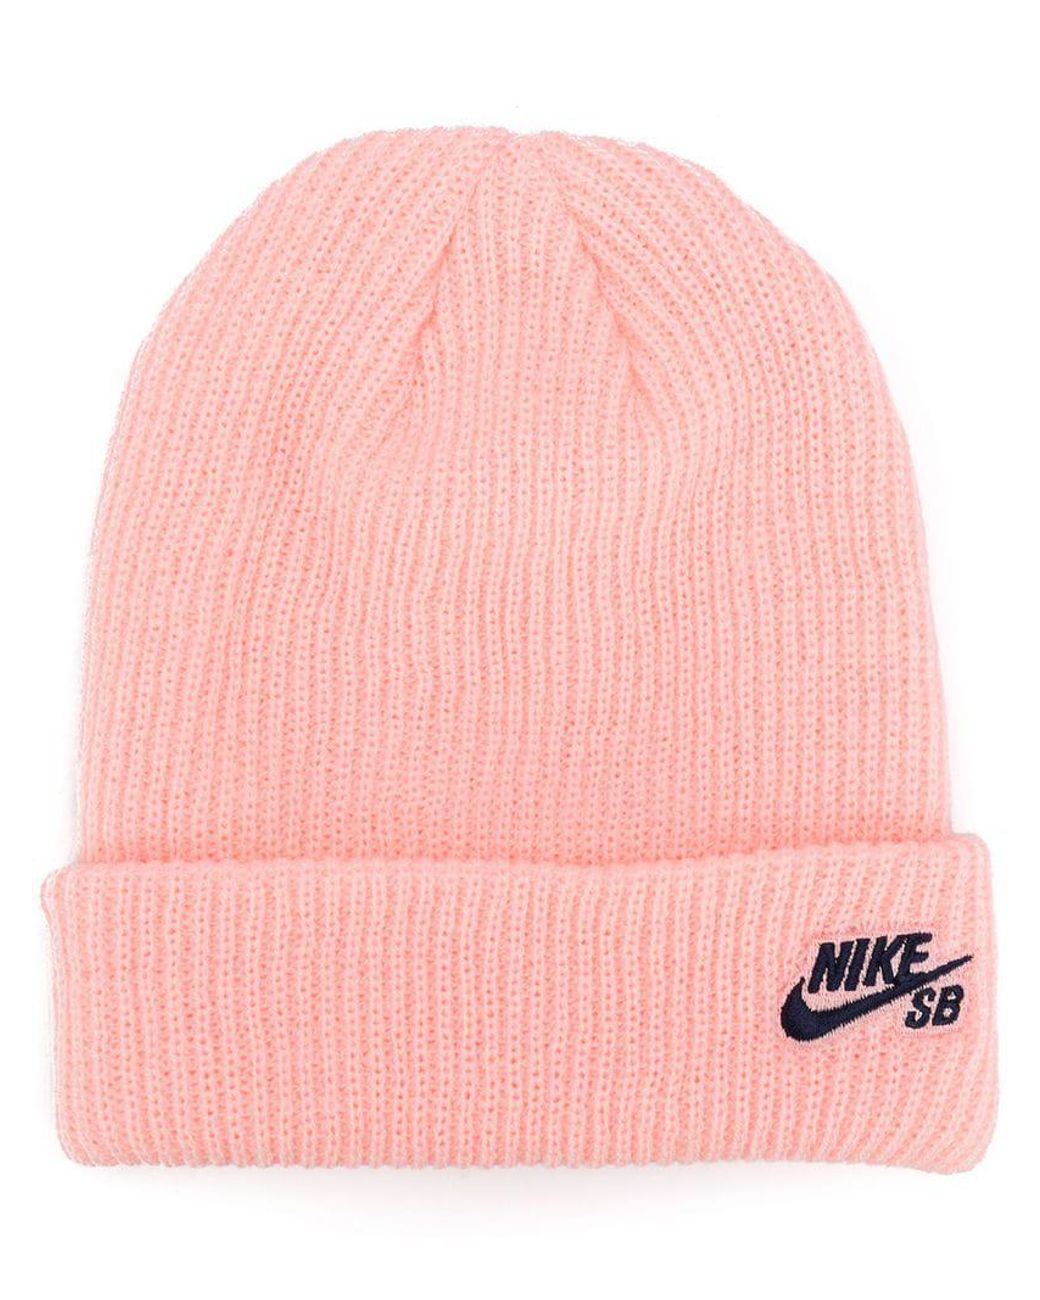 Nike Sb Fisherman Beanie Hat in Pink | Lyst Canada